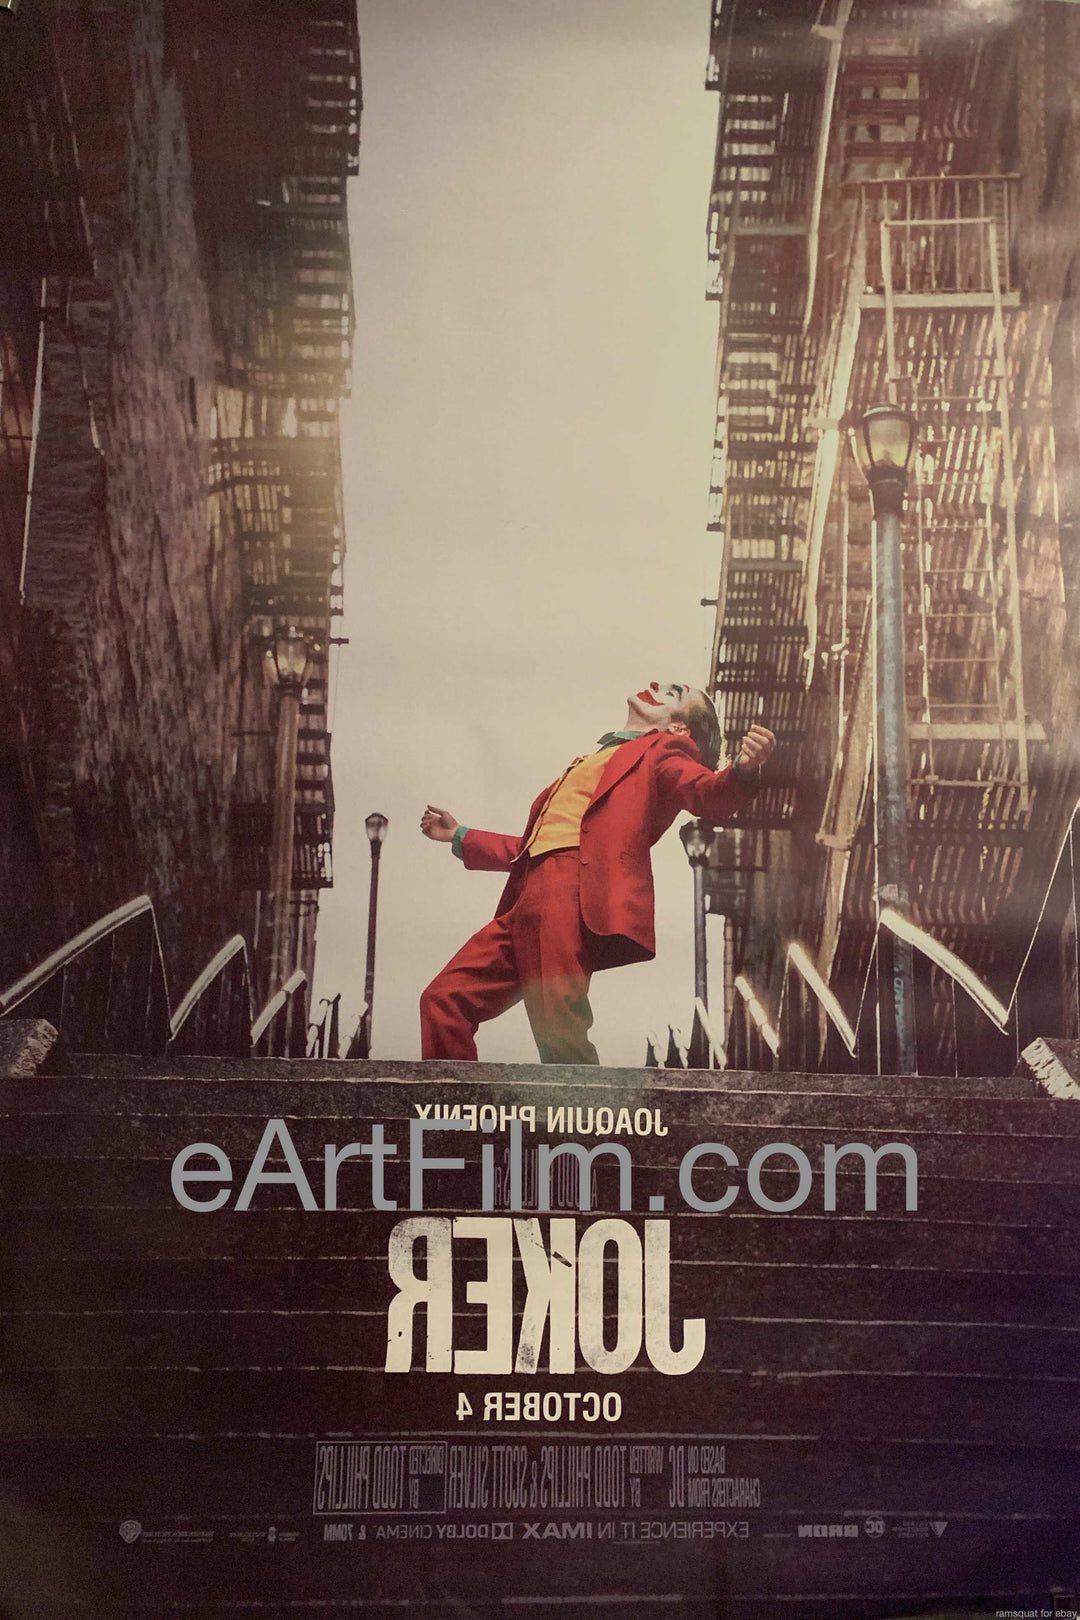 eArtFilm.com U.S Original Theatrical Release Bus Shelter Poster 48"x72" Joker 2019 48x70 bus shelter double sided Joaquin Phoenix Robert De Niro